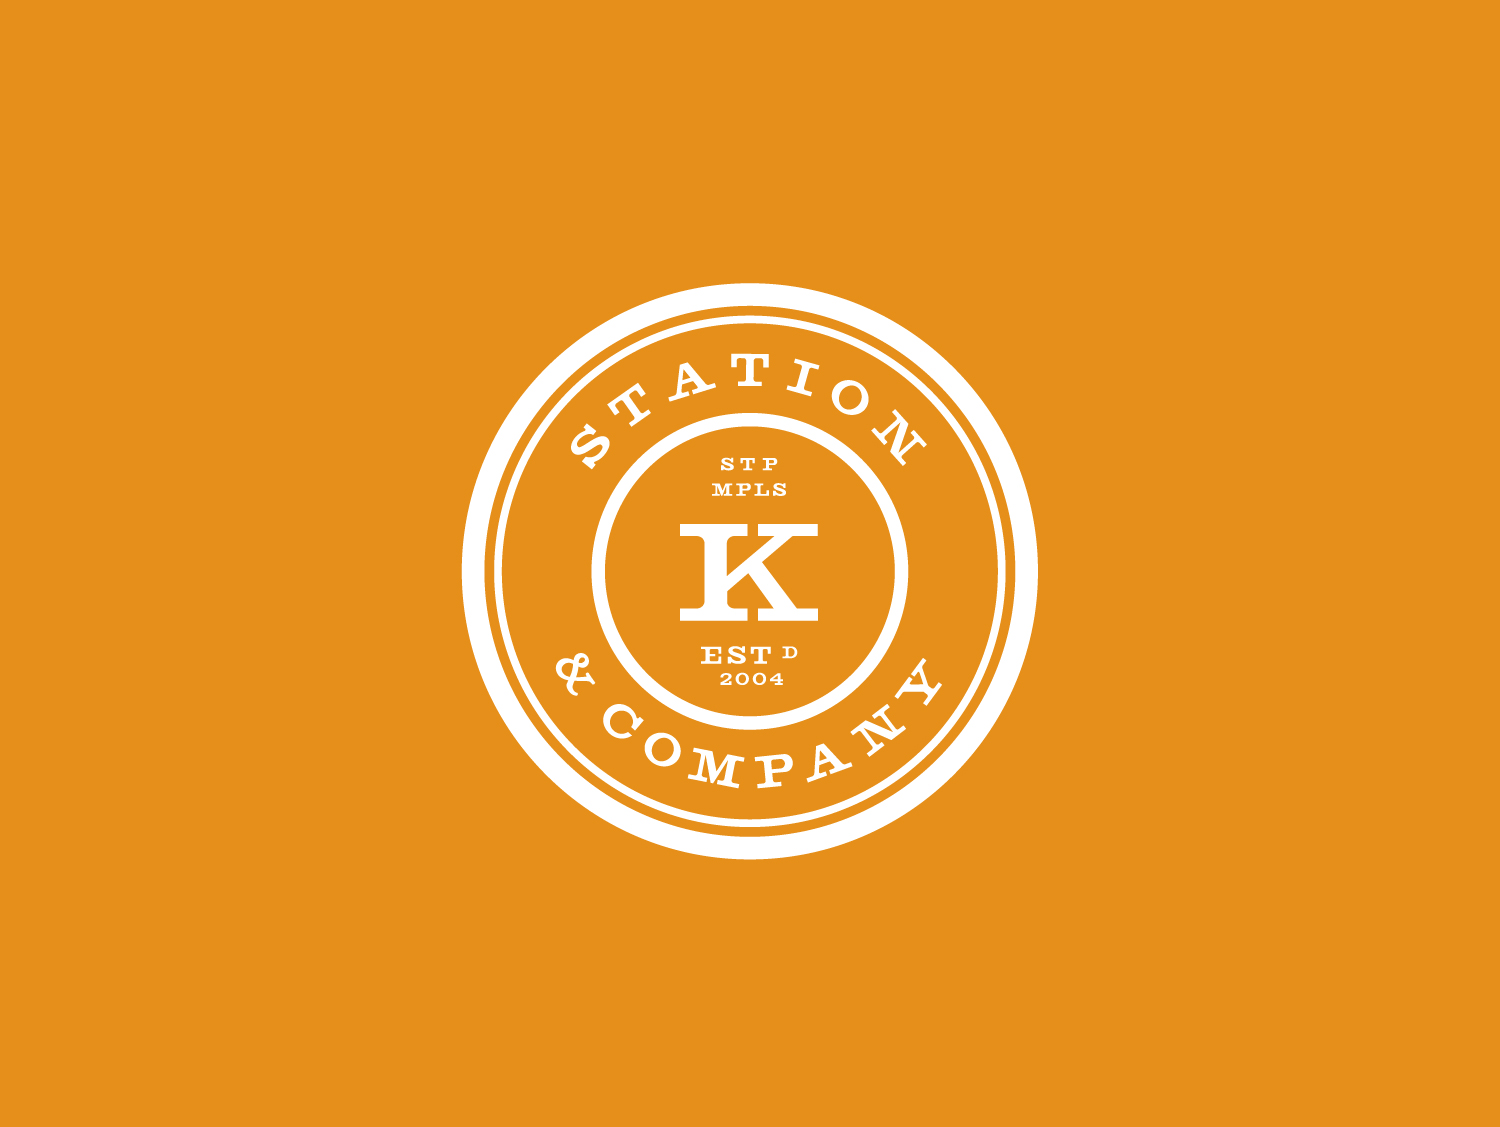 Station-K-and-Co-logo-01.jpg